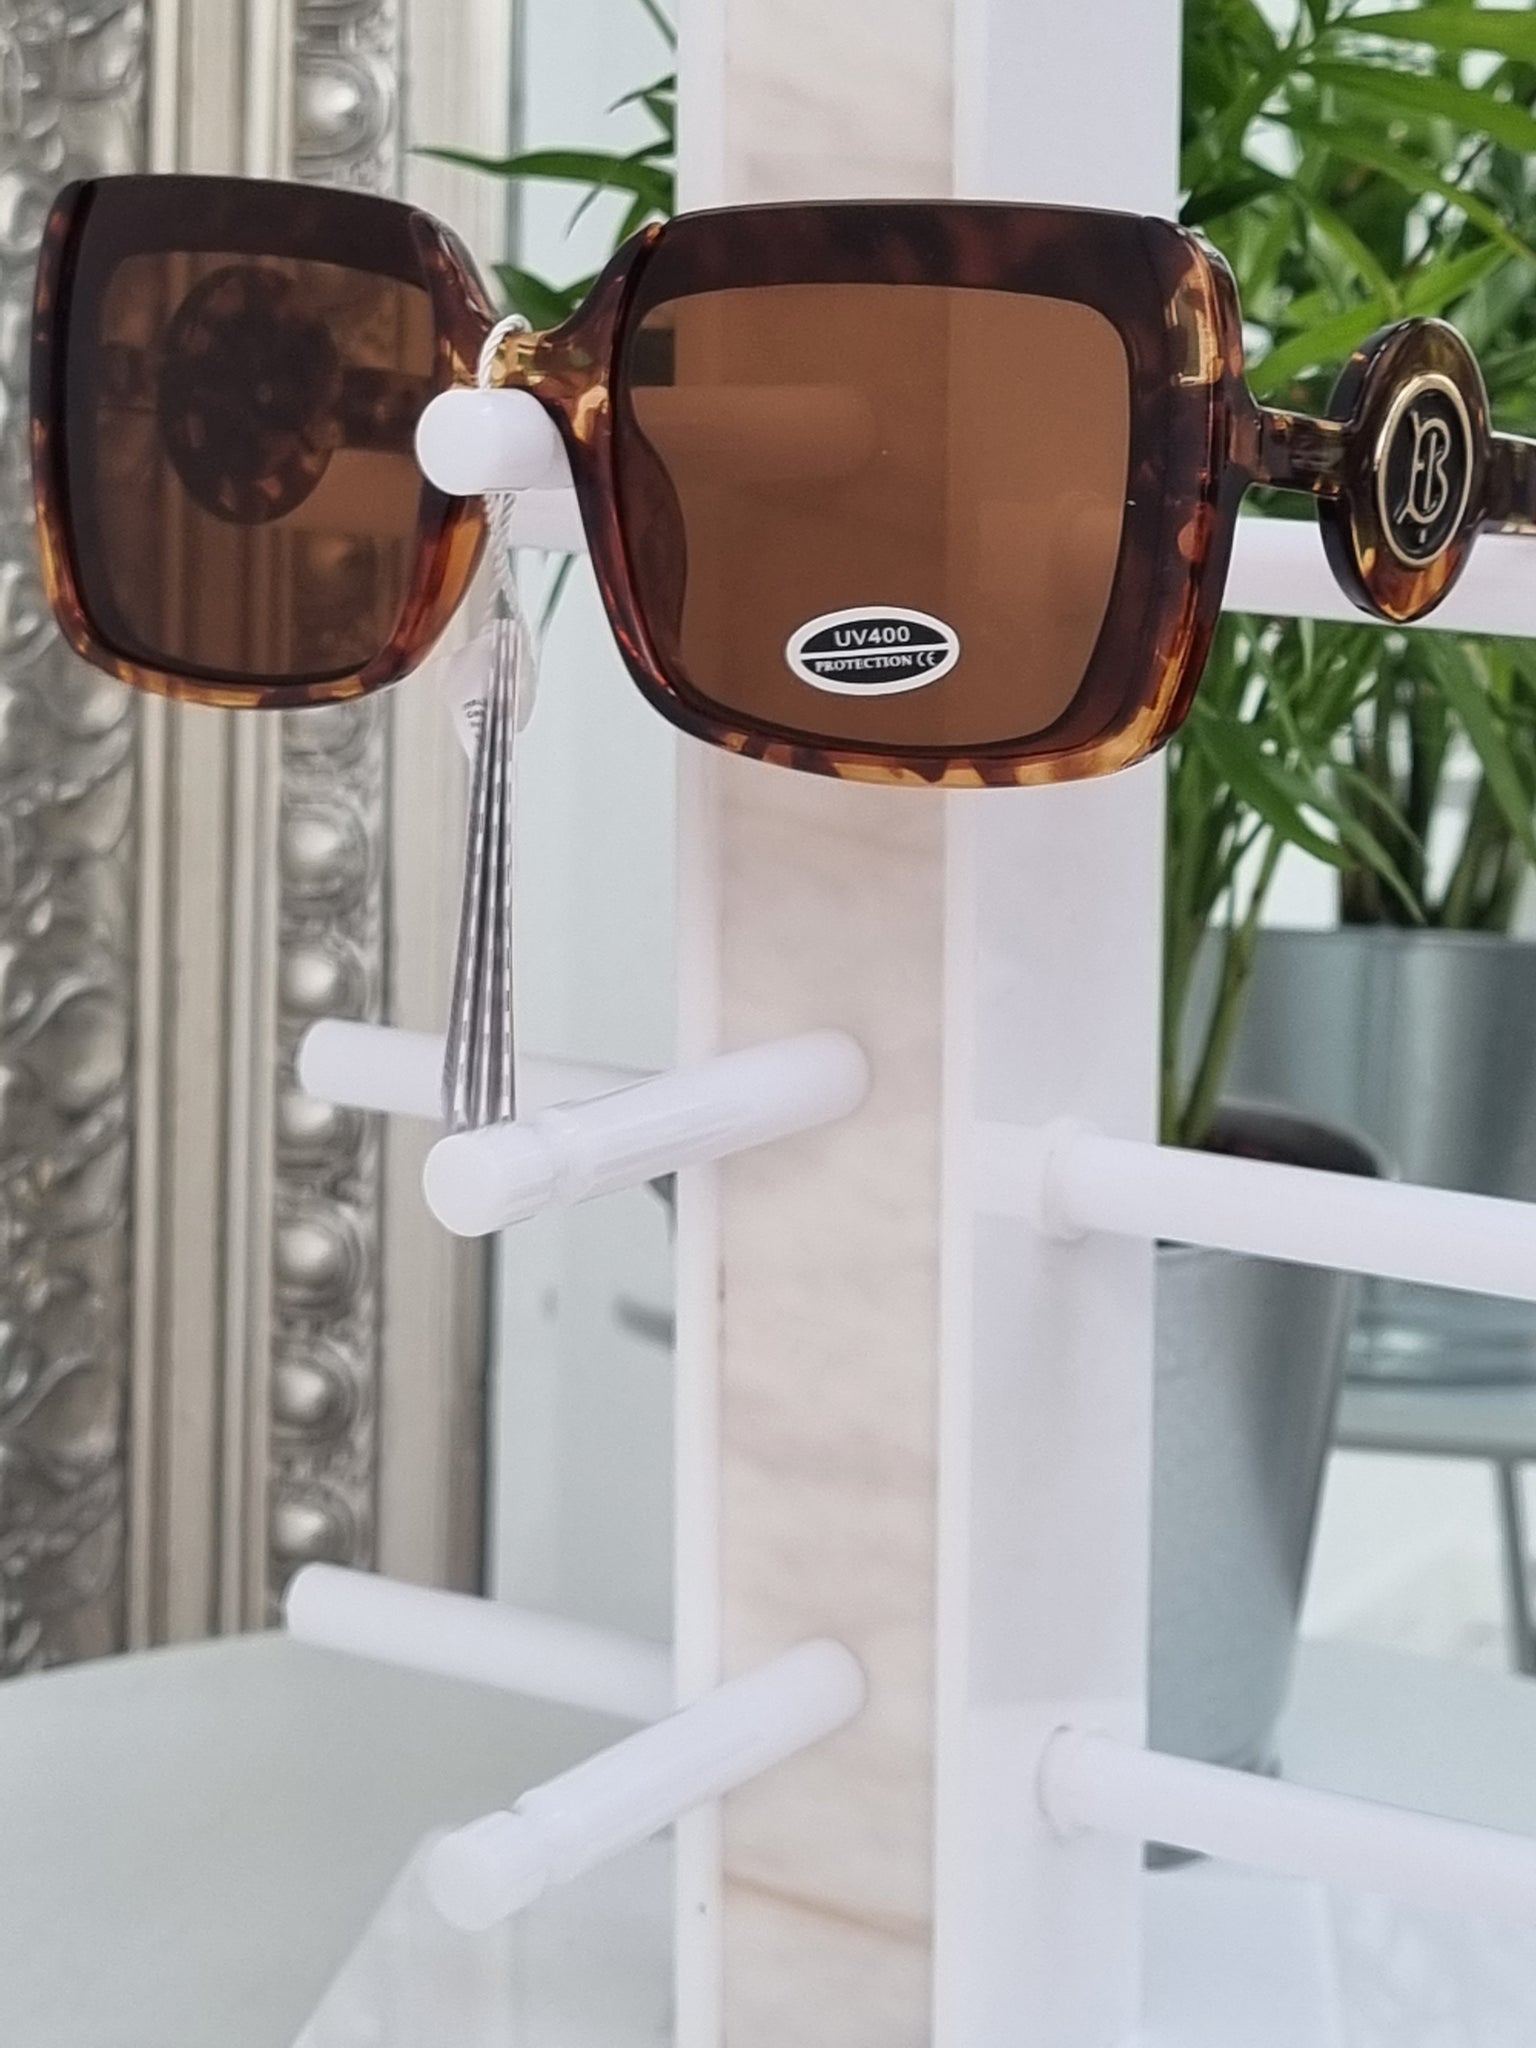 Queen B Sunglasses - Tortoise Shell